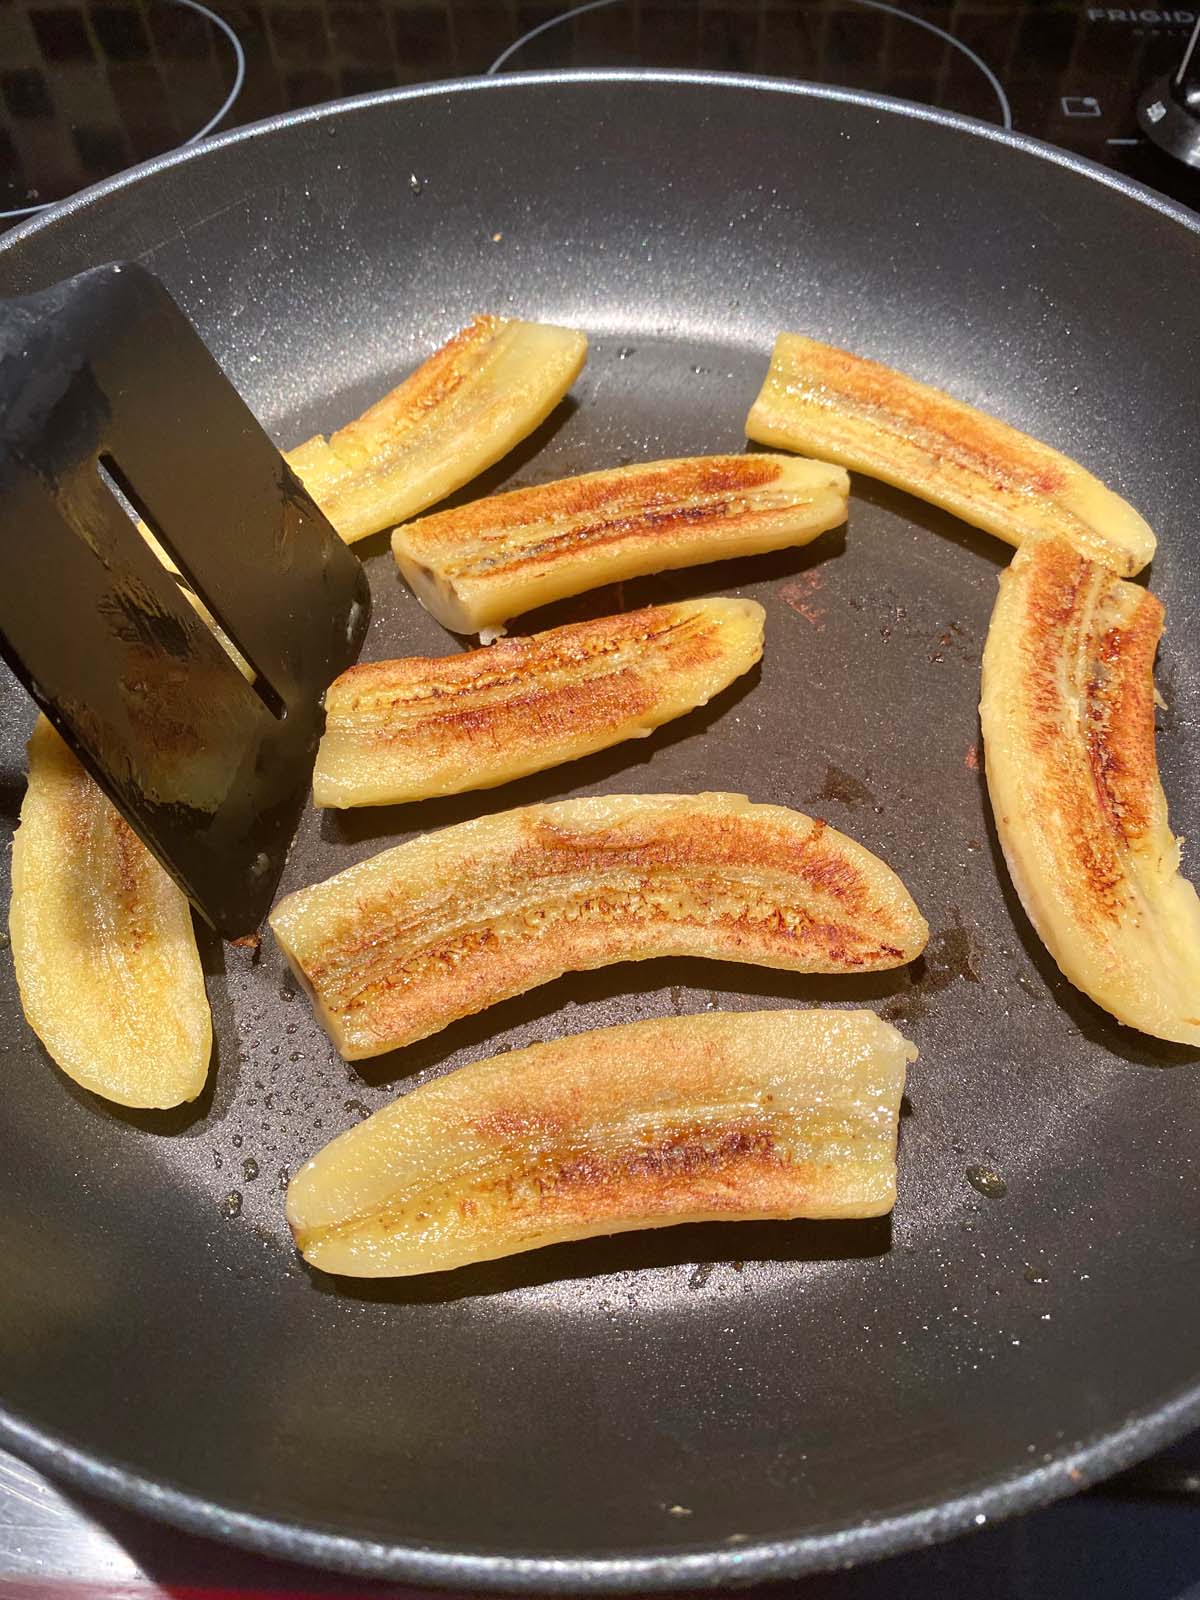 Fried bananas in a frying pan.